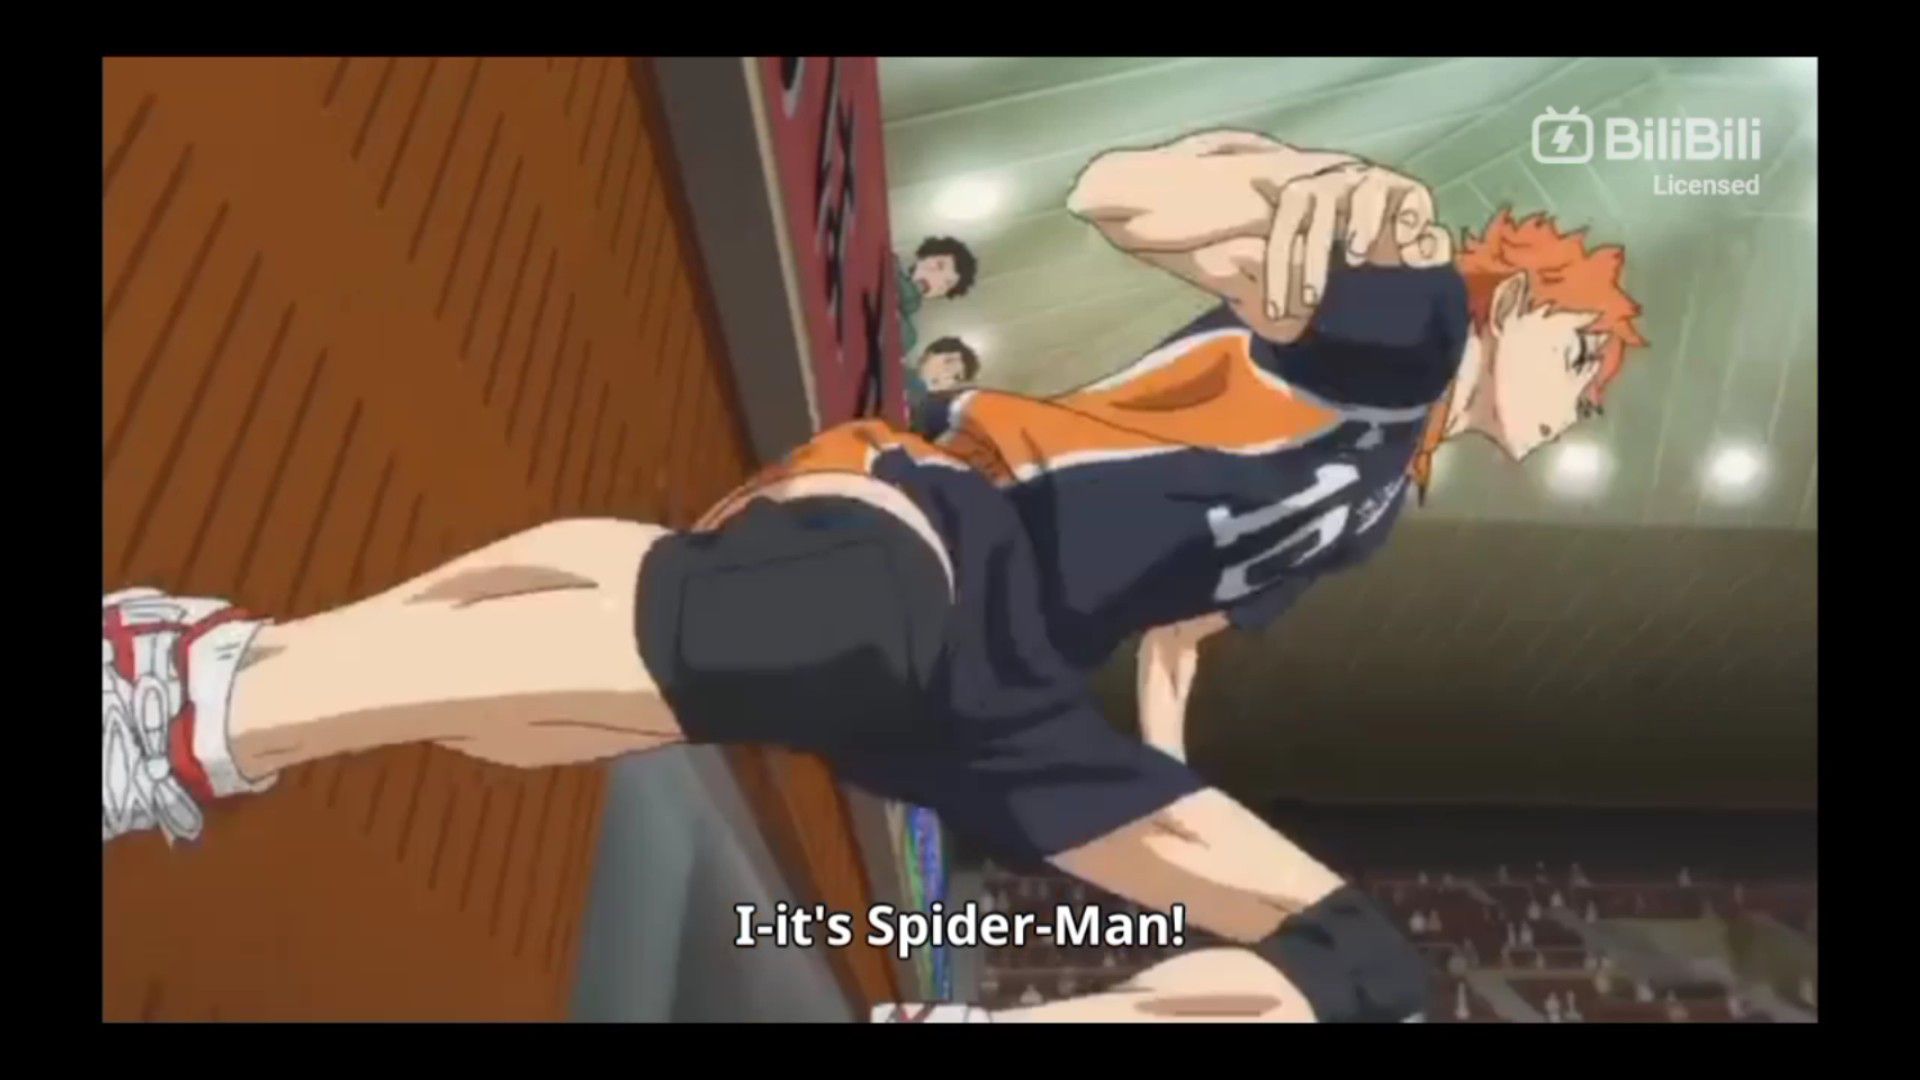 [Haikyuu!!] Hinata Shoyo digs as a spiderman - BiliBili